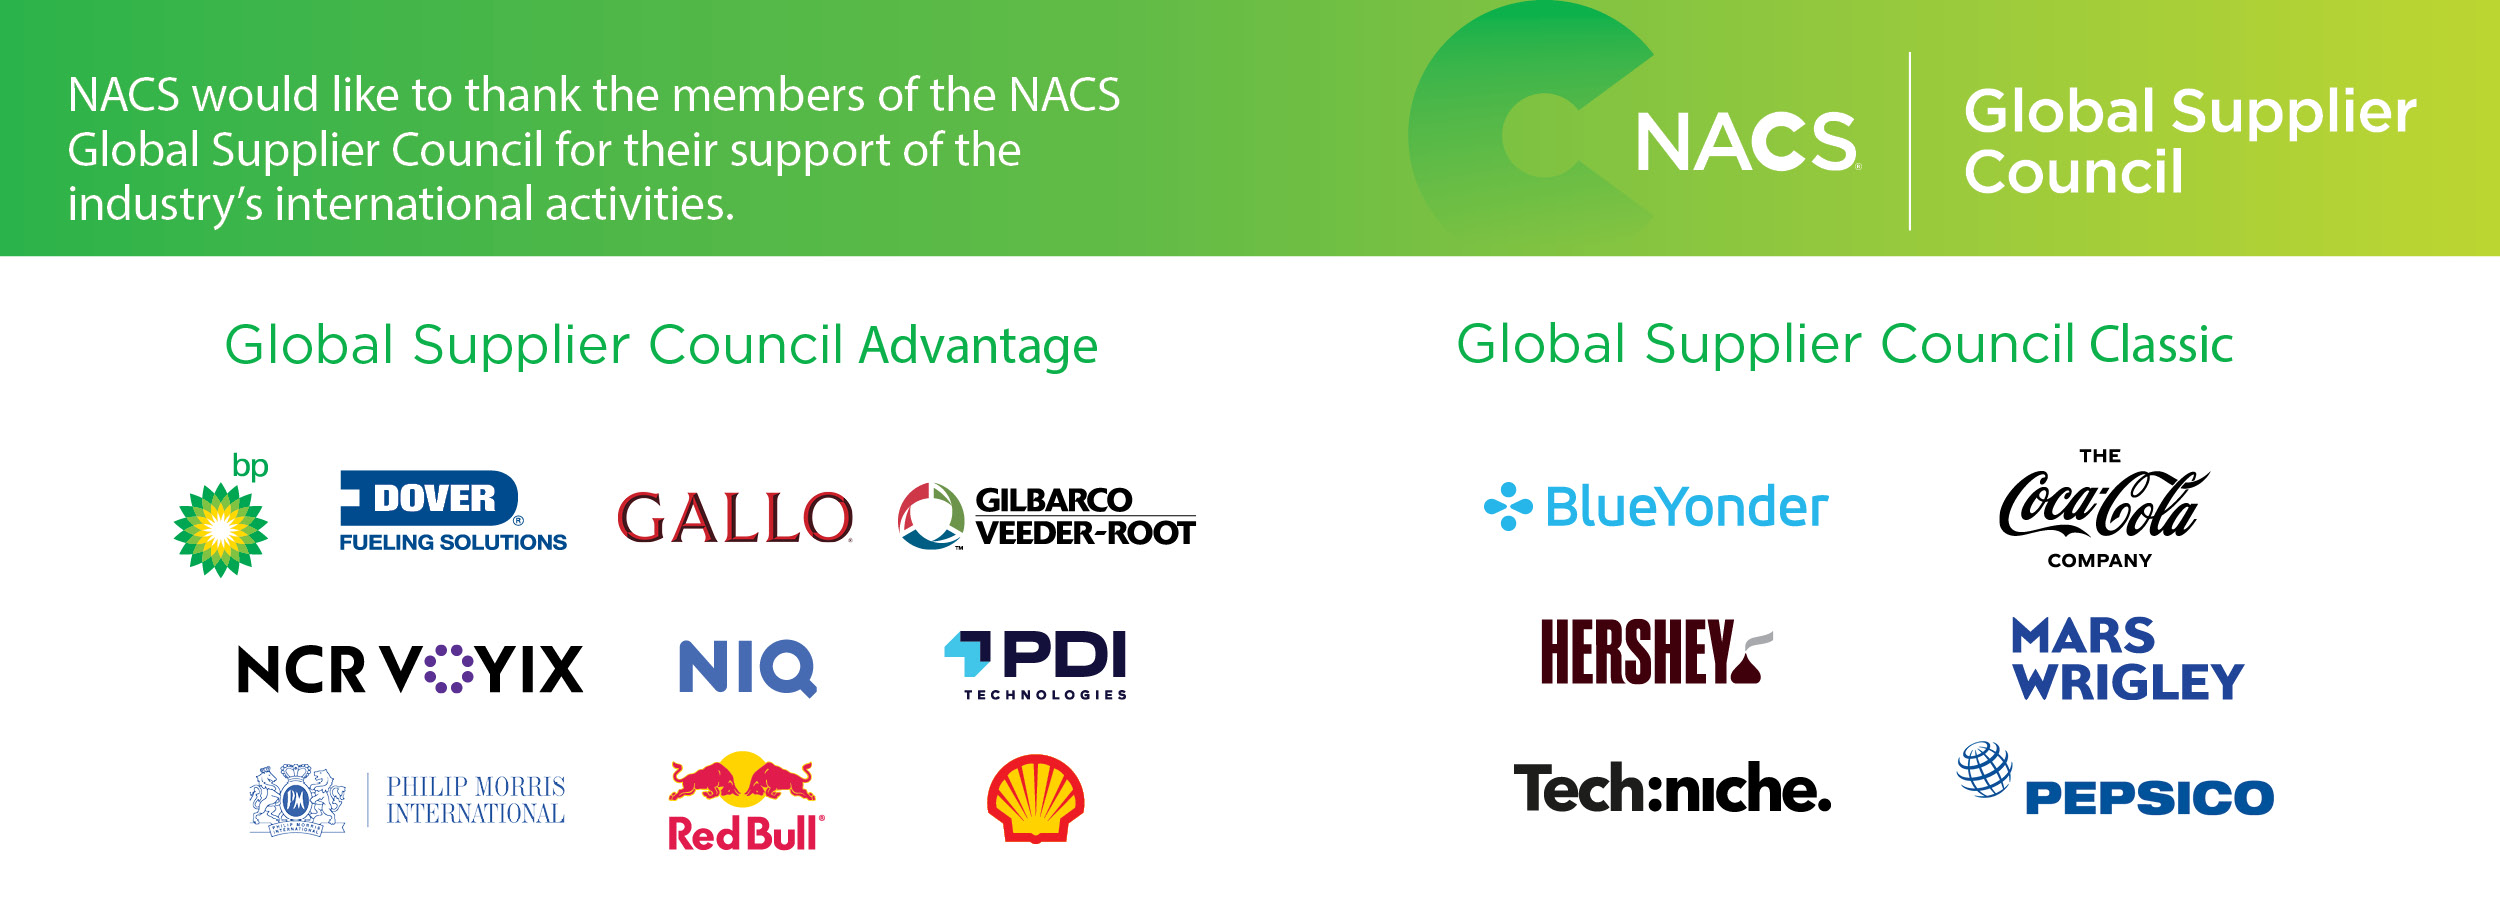 Thank You to NACS Global Supplier Council